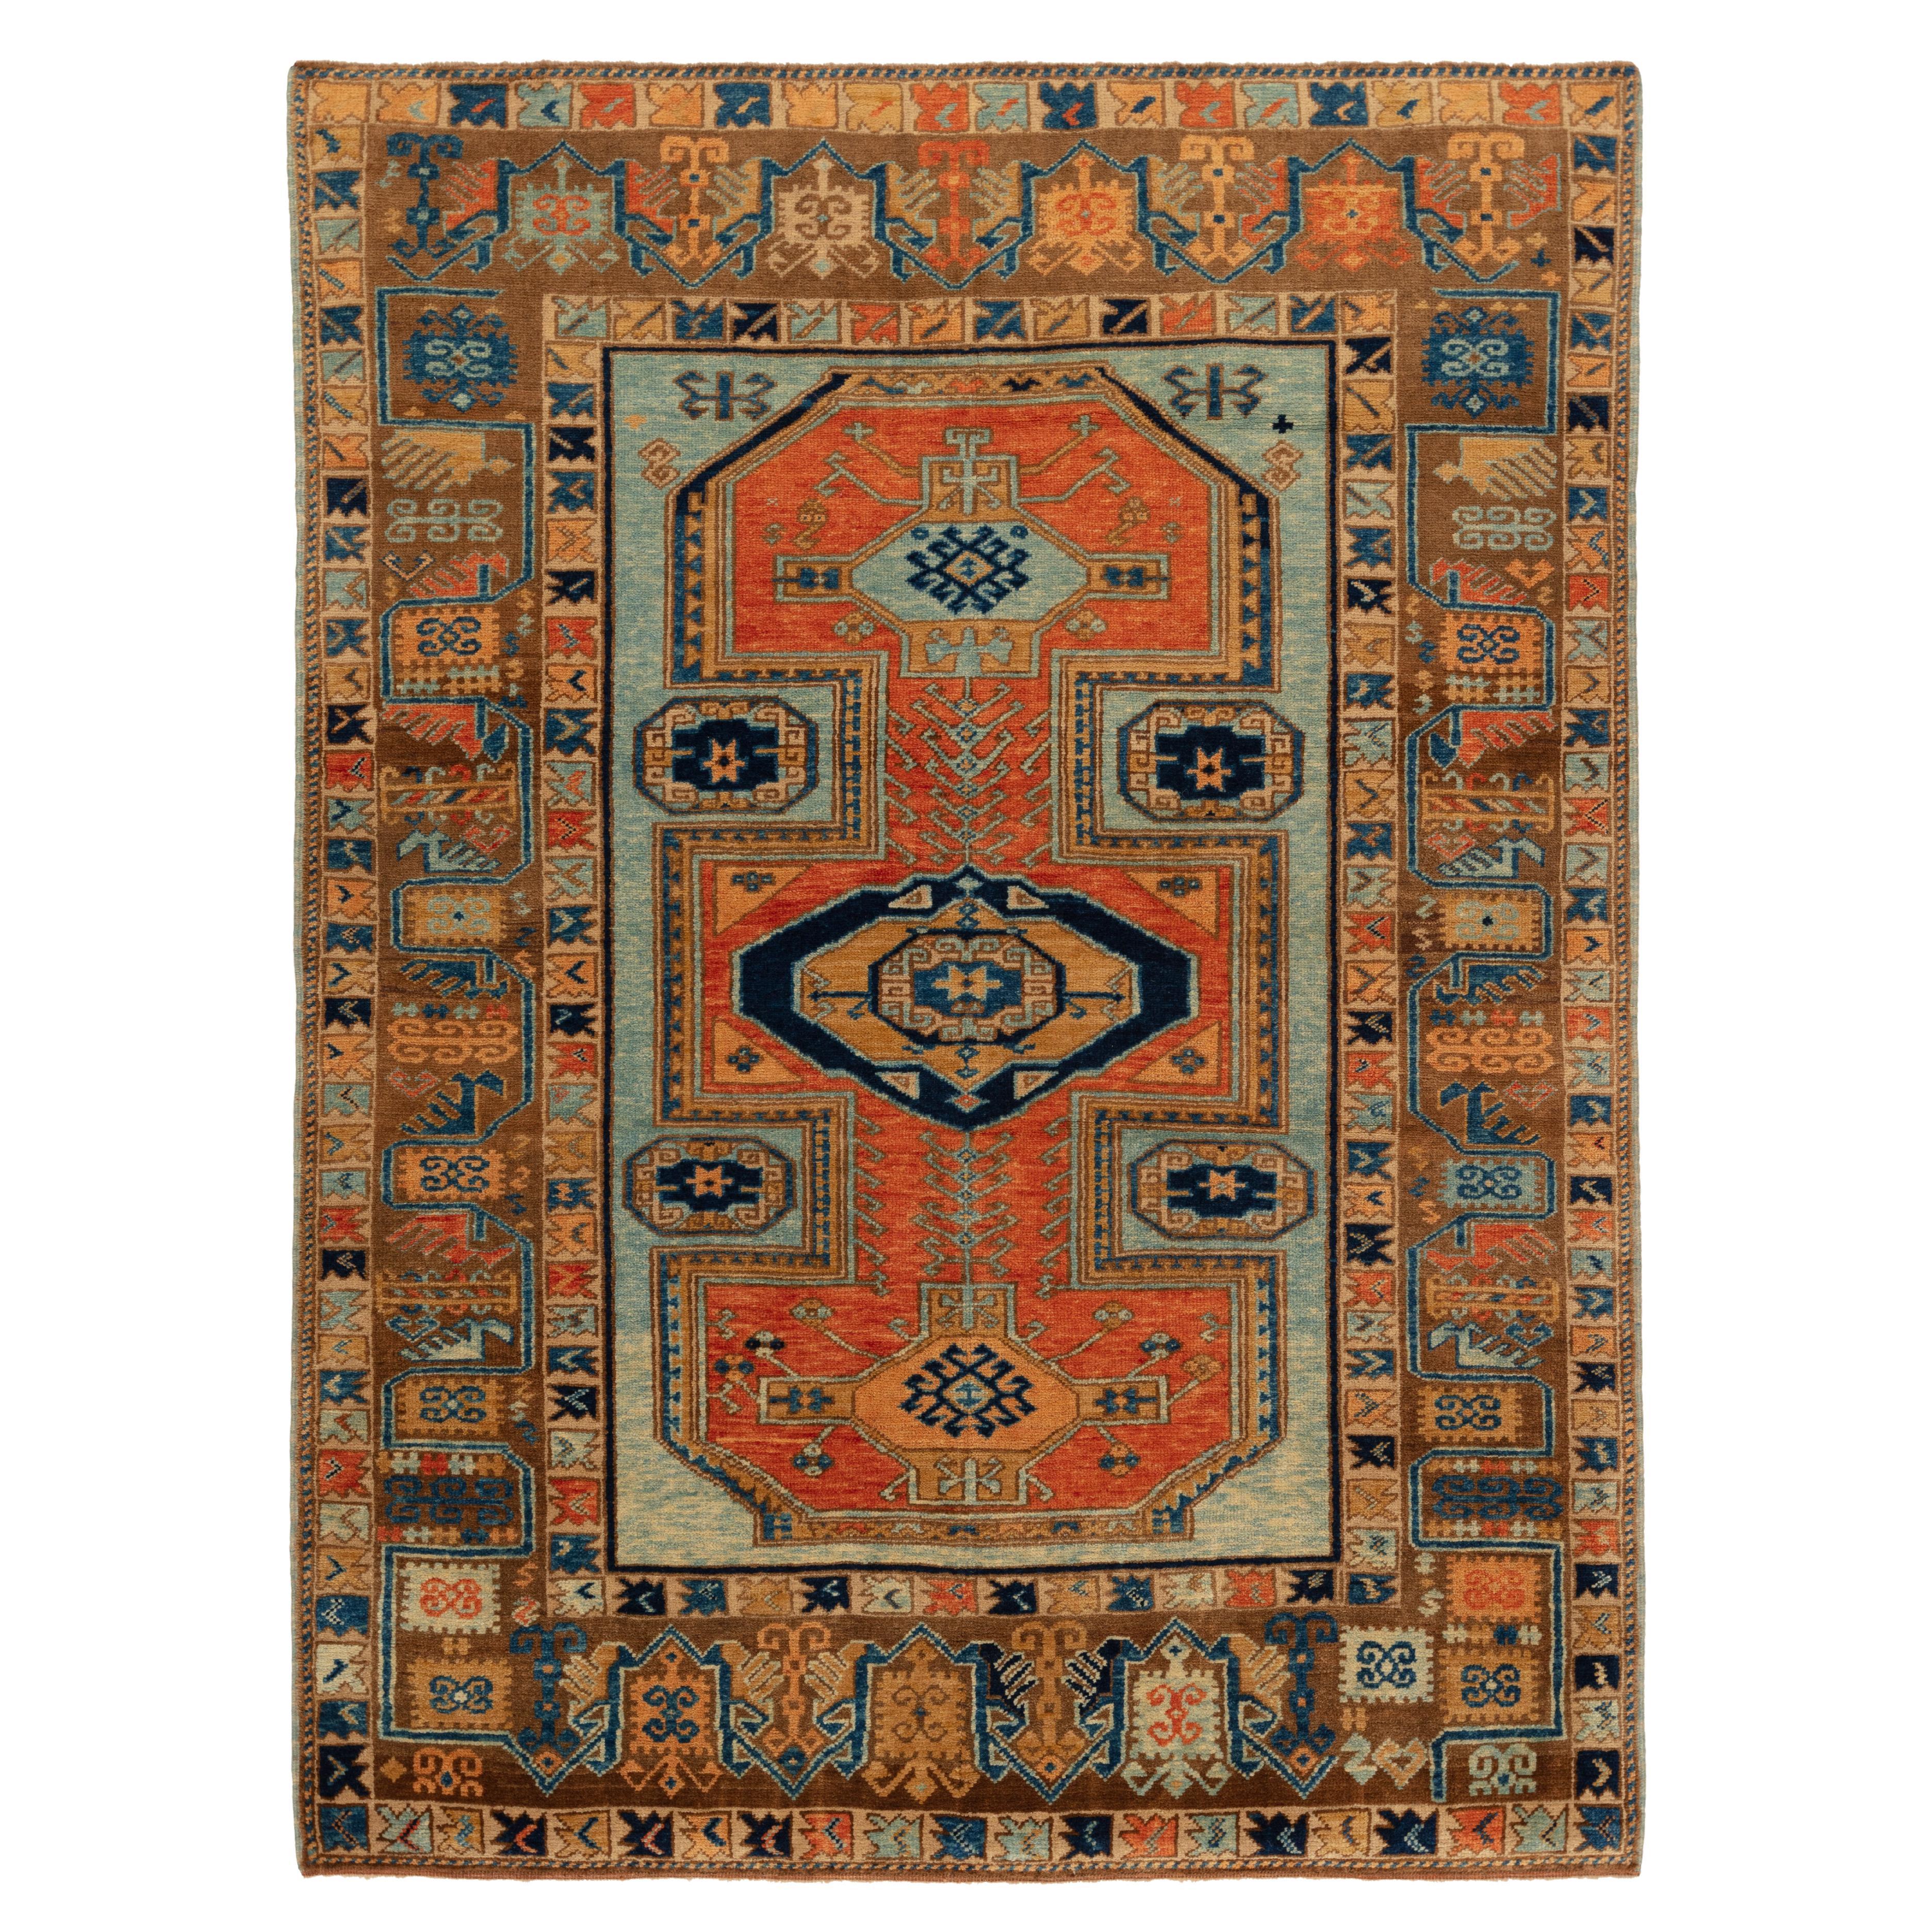 Ararat Rugs Village Rug, Antique Anatolian Turkish Revival Carpet Natural Dyed